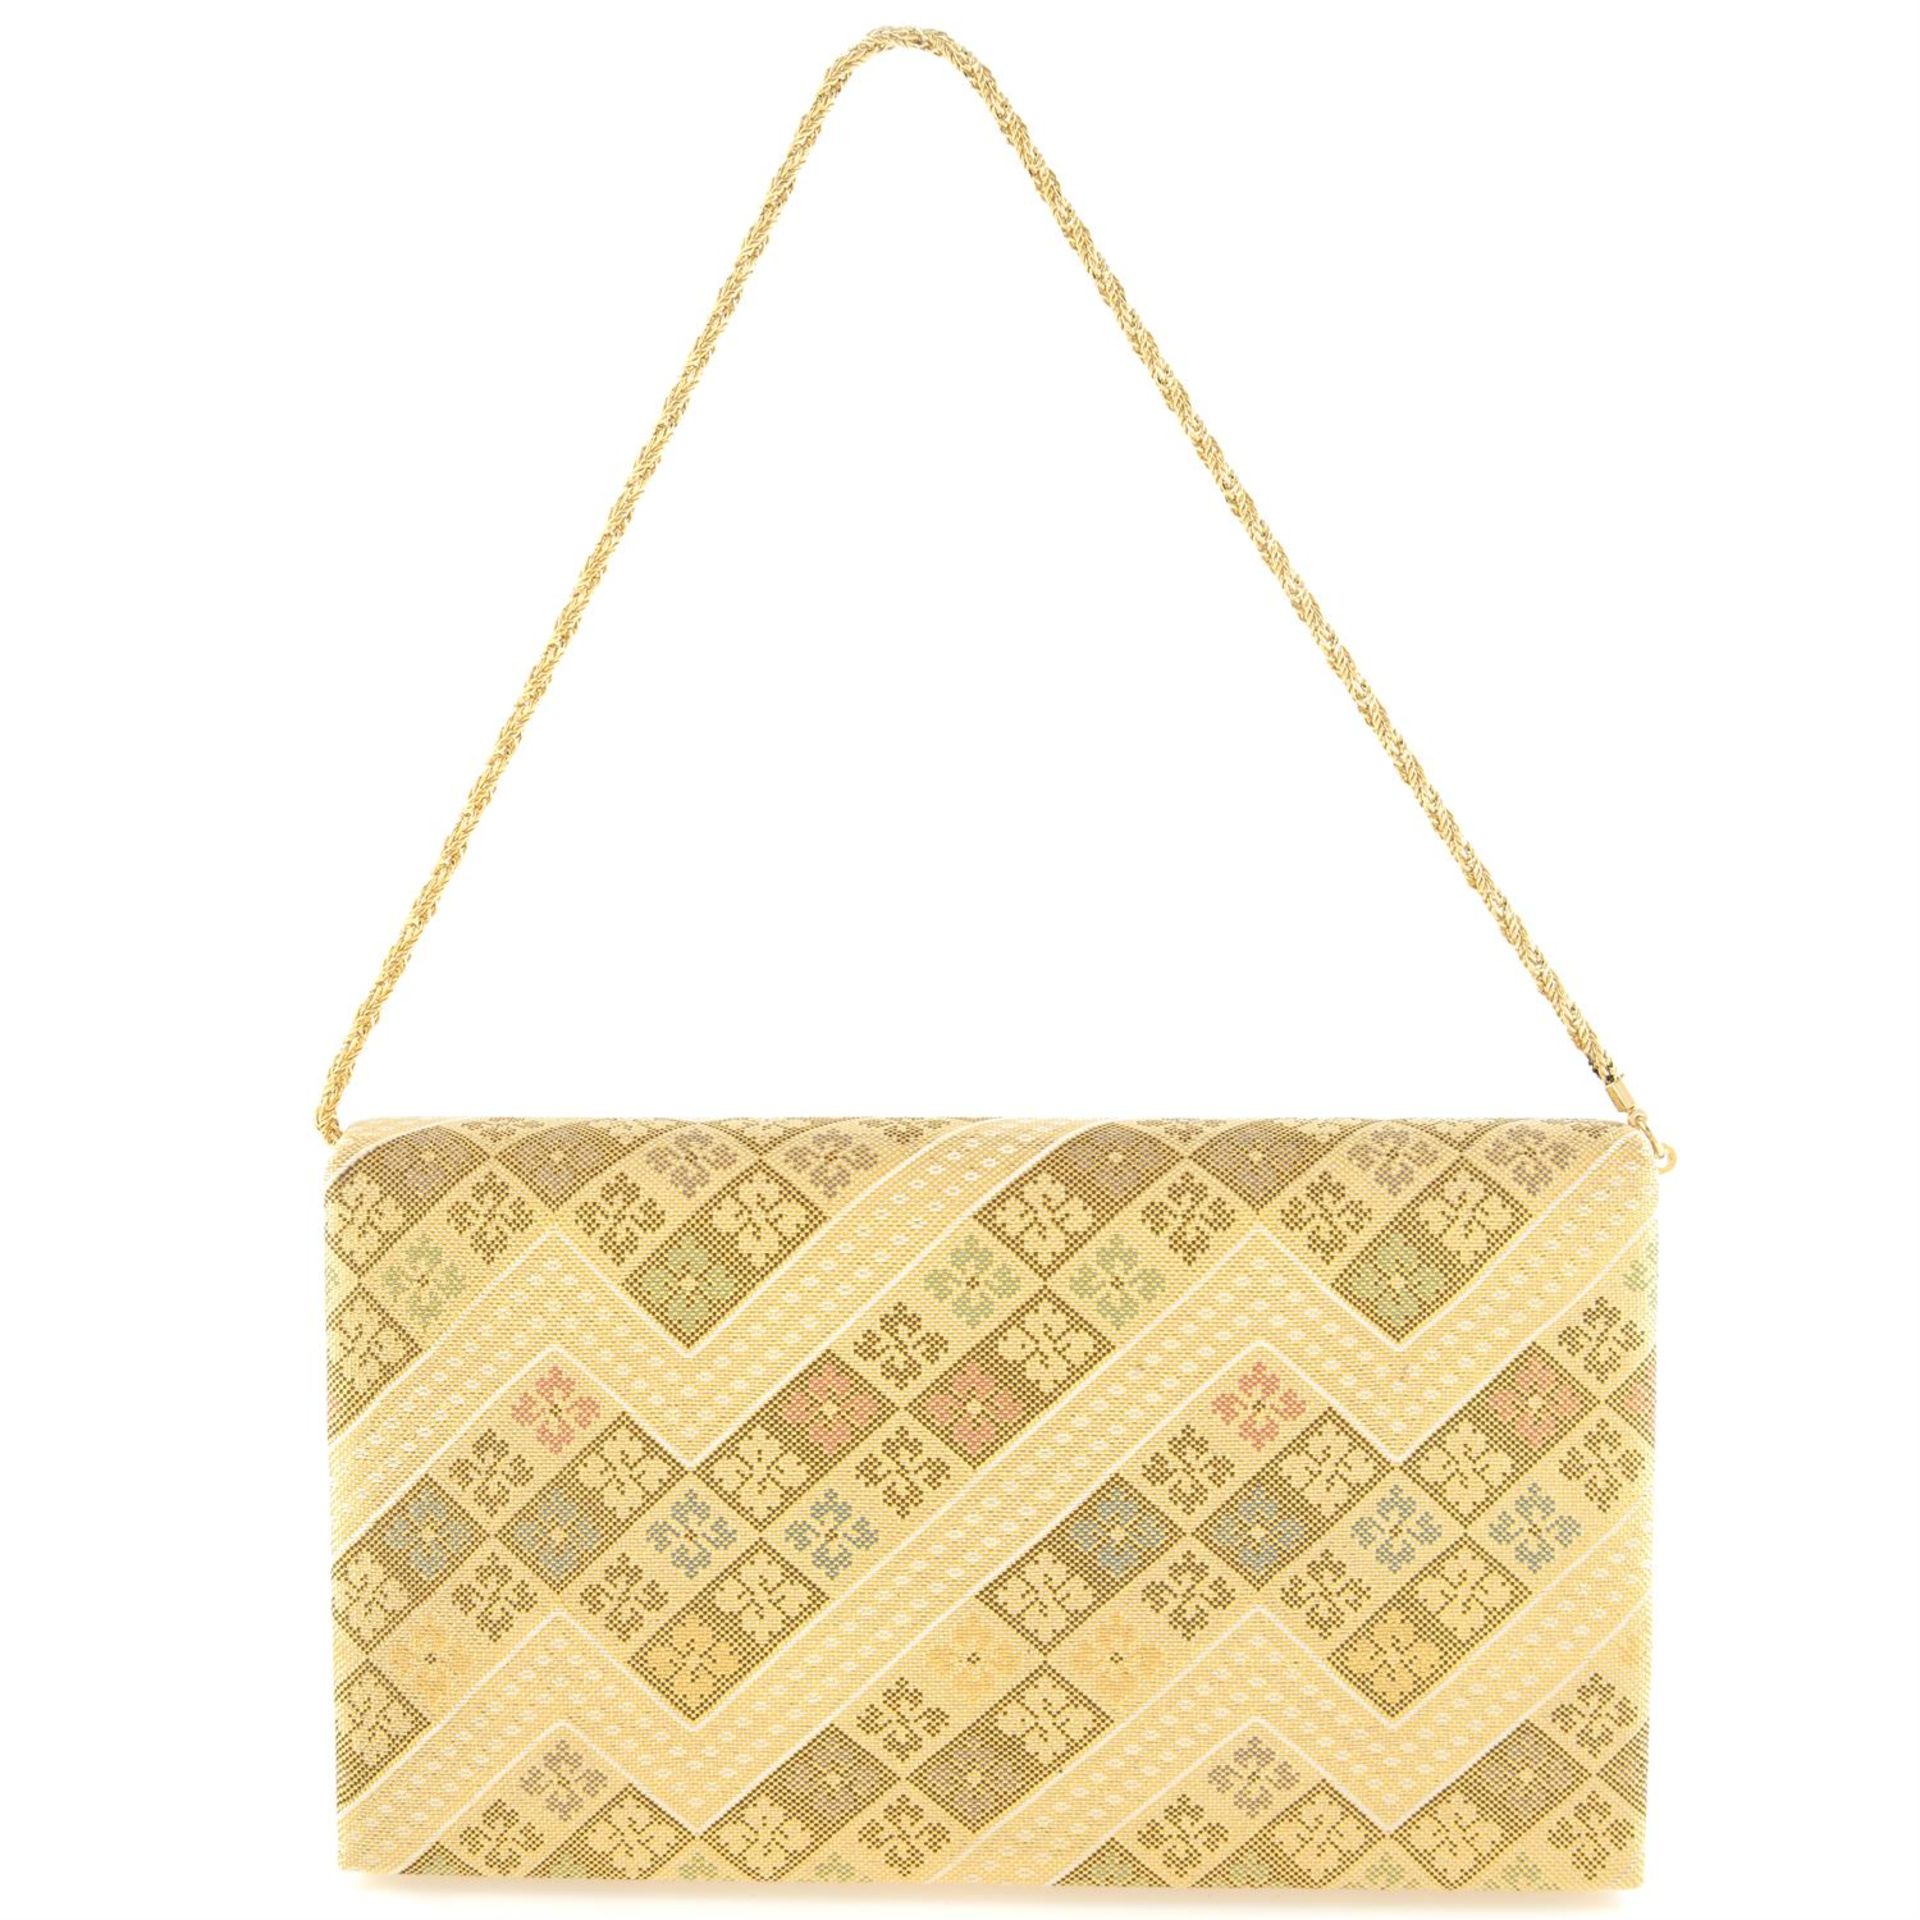 Mikimoto - clutch bag. - Image 2 of 6